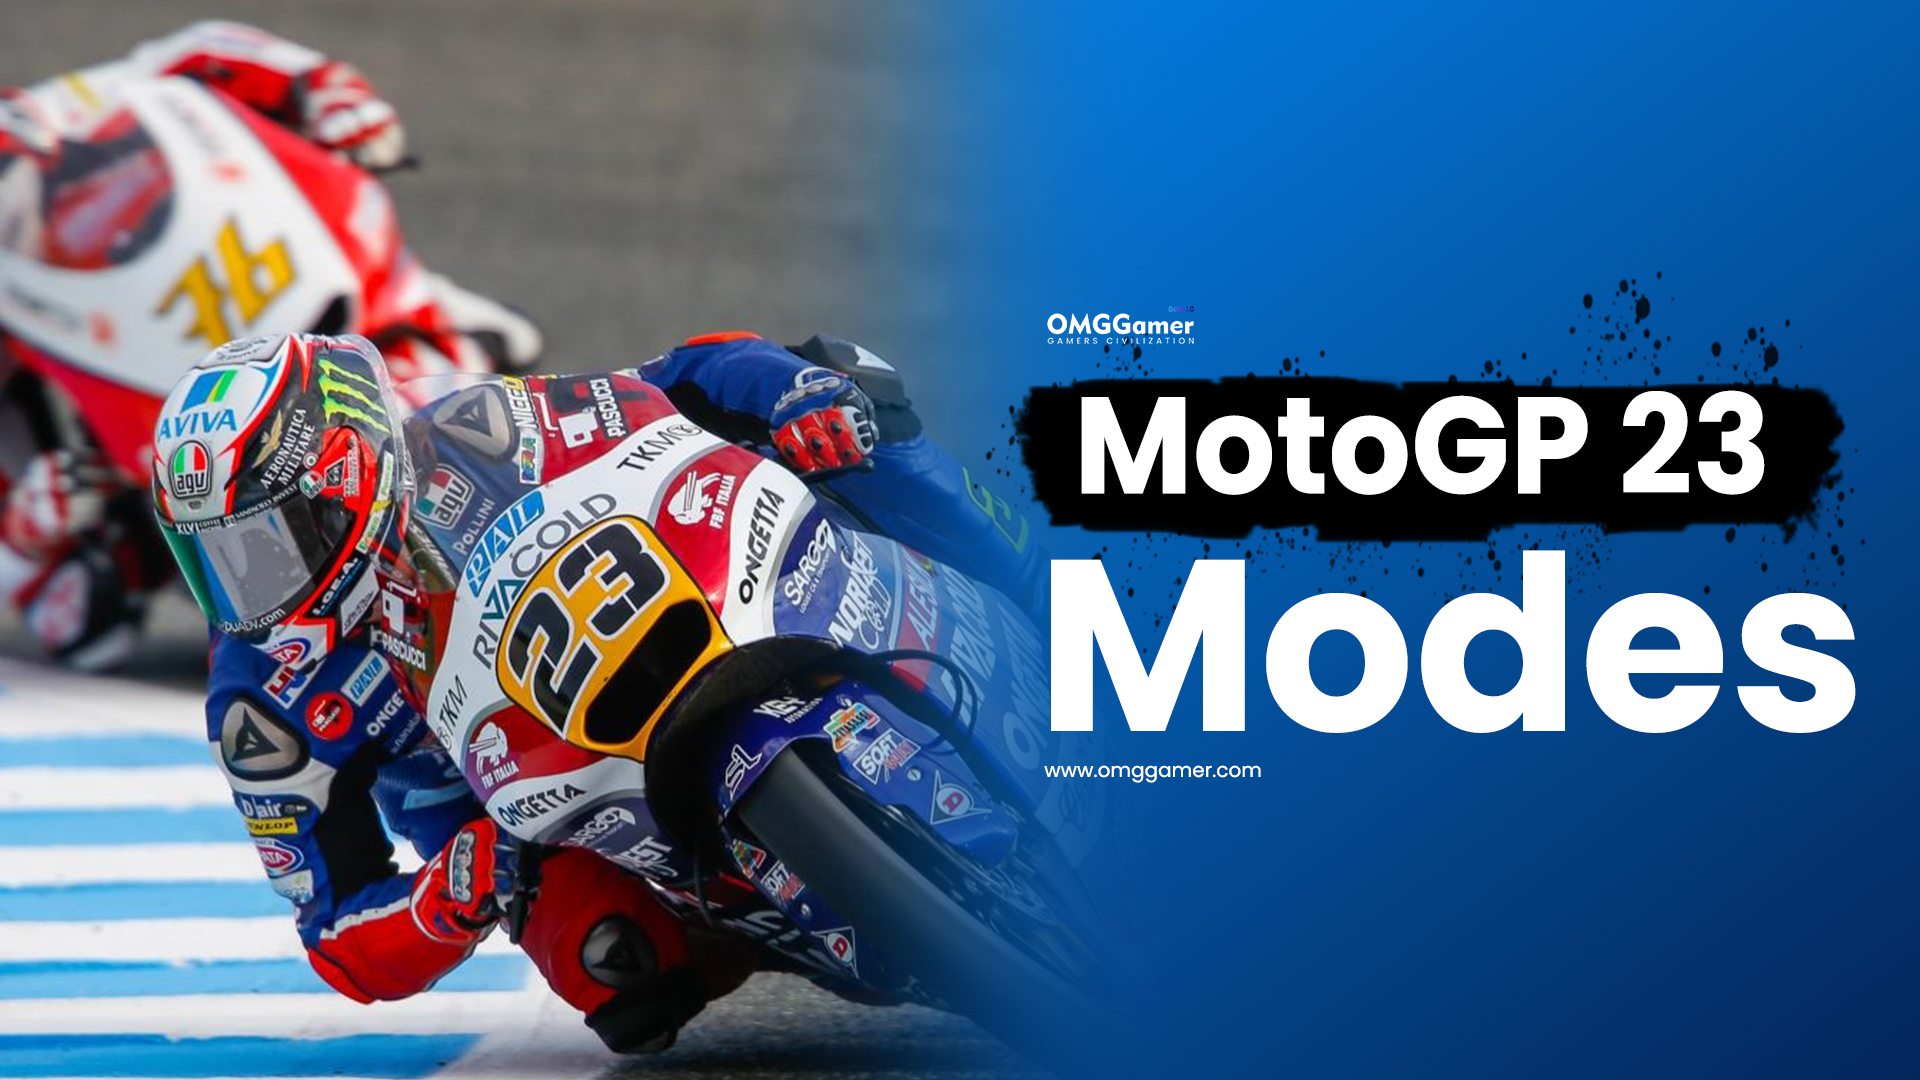 MotoGP 23 Modes